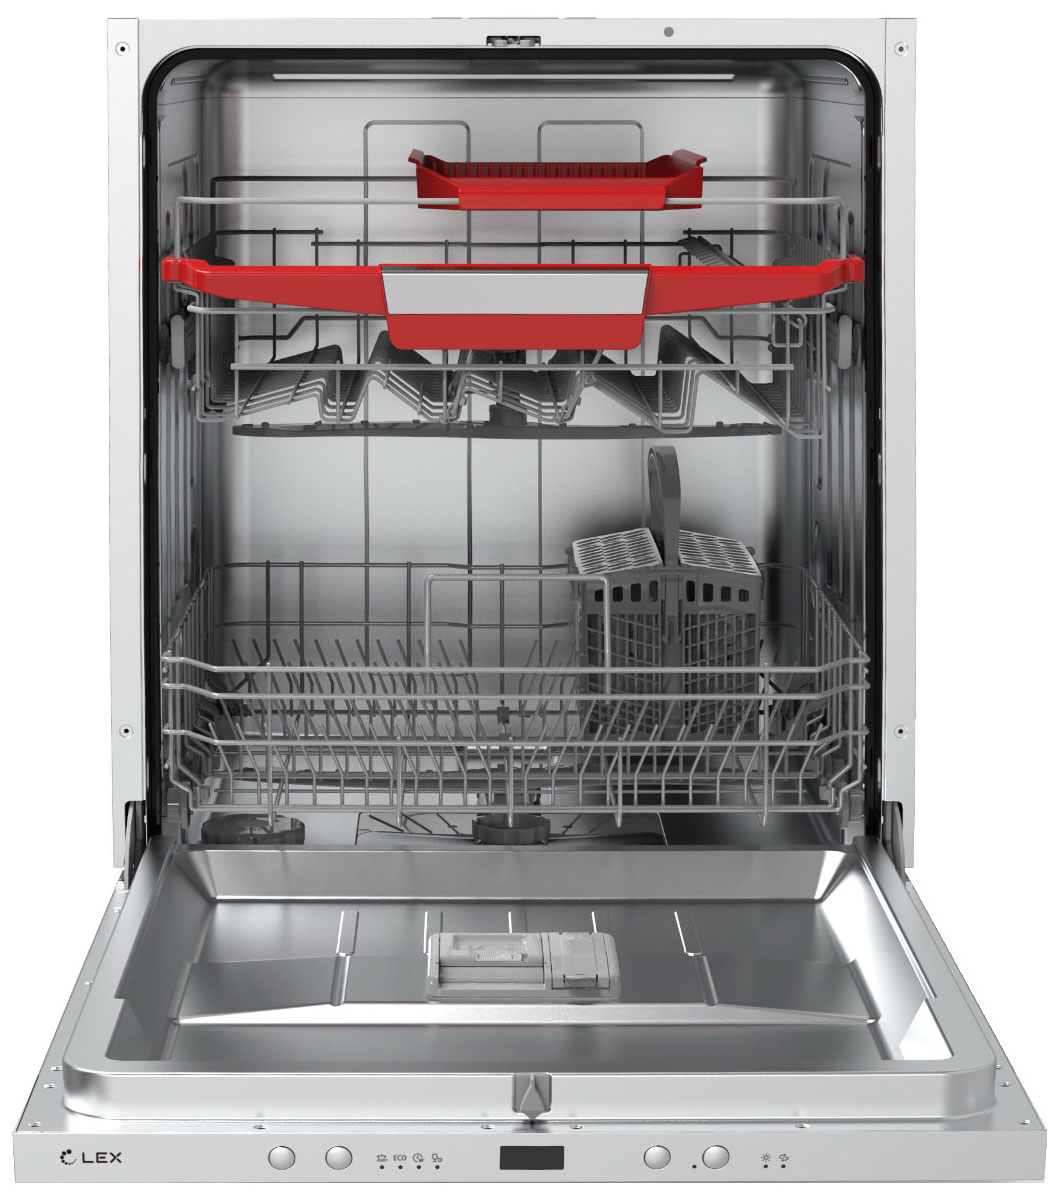 Встраиваемая посудомоечная машина LEX PM 6043 B посудомоечная машина встраиваемая lex pm 4562 b 45 см chmi000300